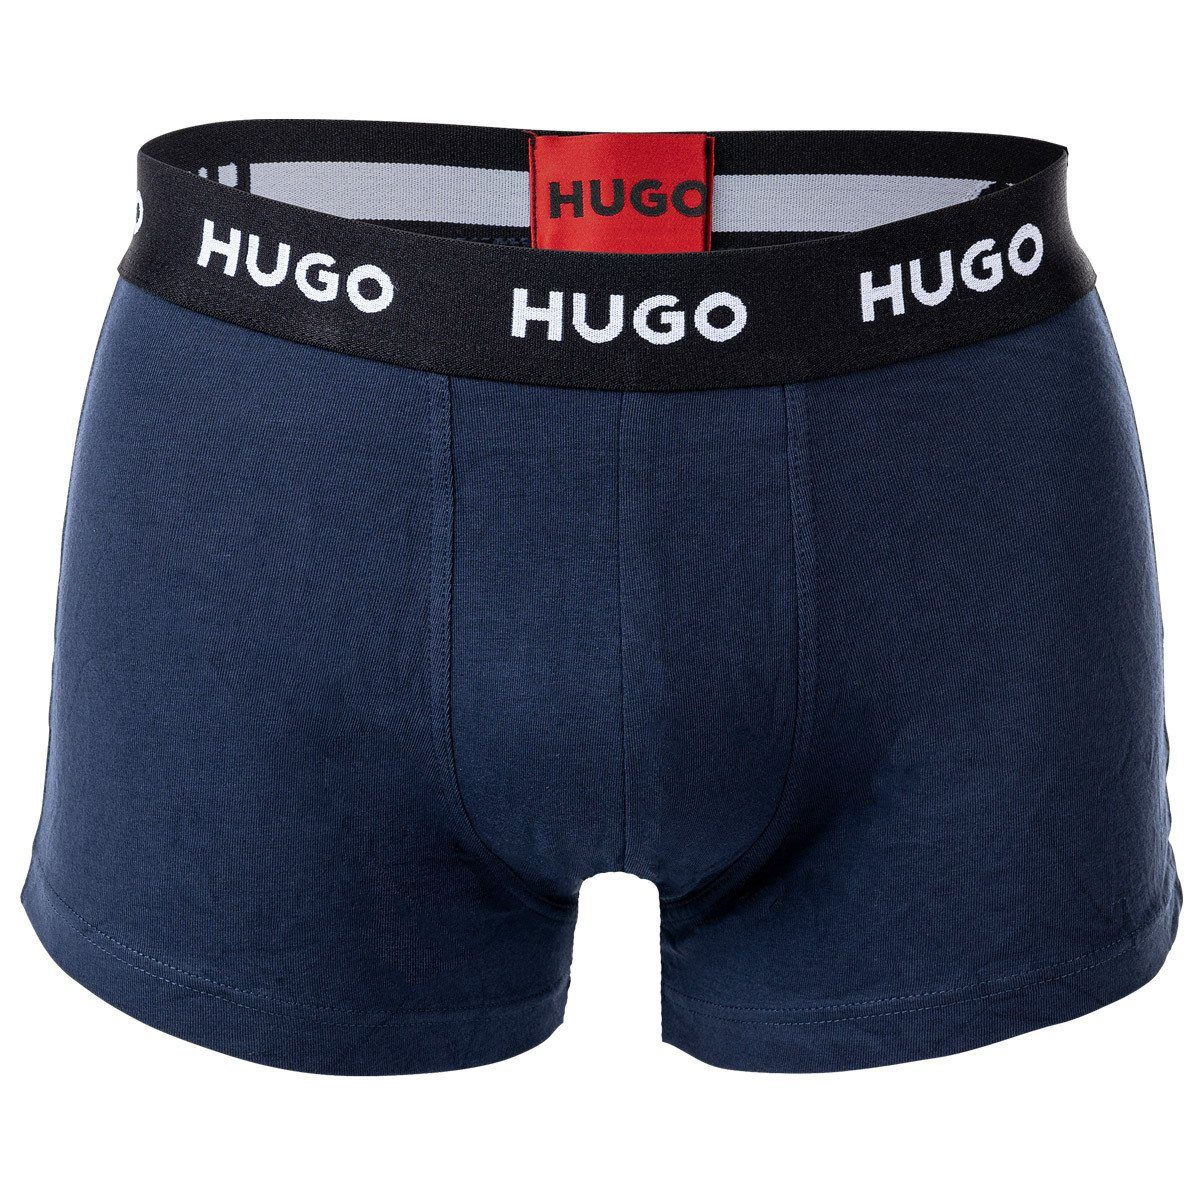 Wäsche/Bademode Boxershorts HUGO Boxer Herren Boxer Shorts, 3er Pack - Trunks Triplet